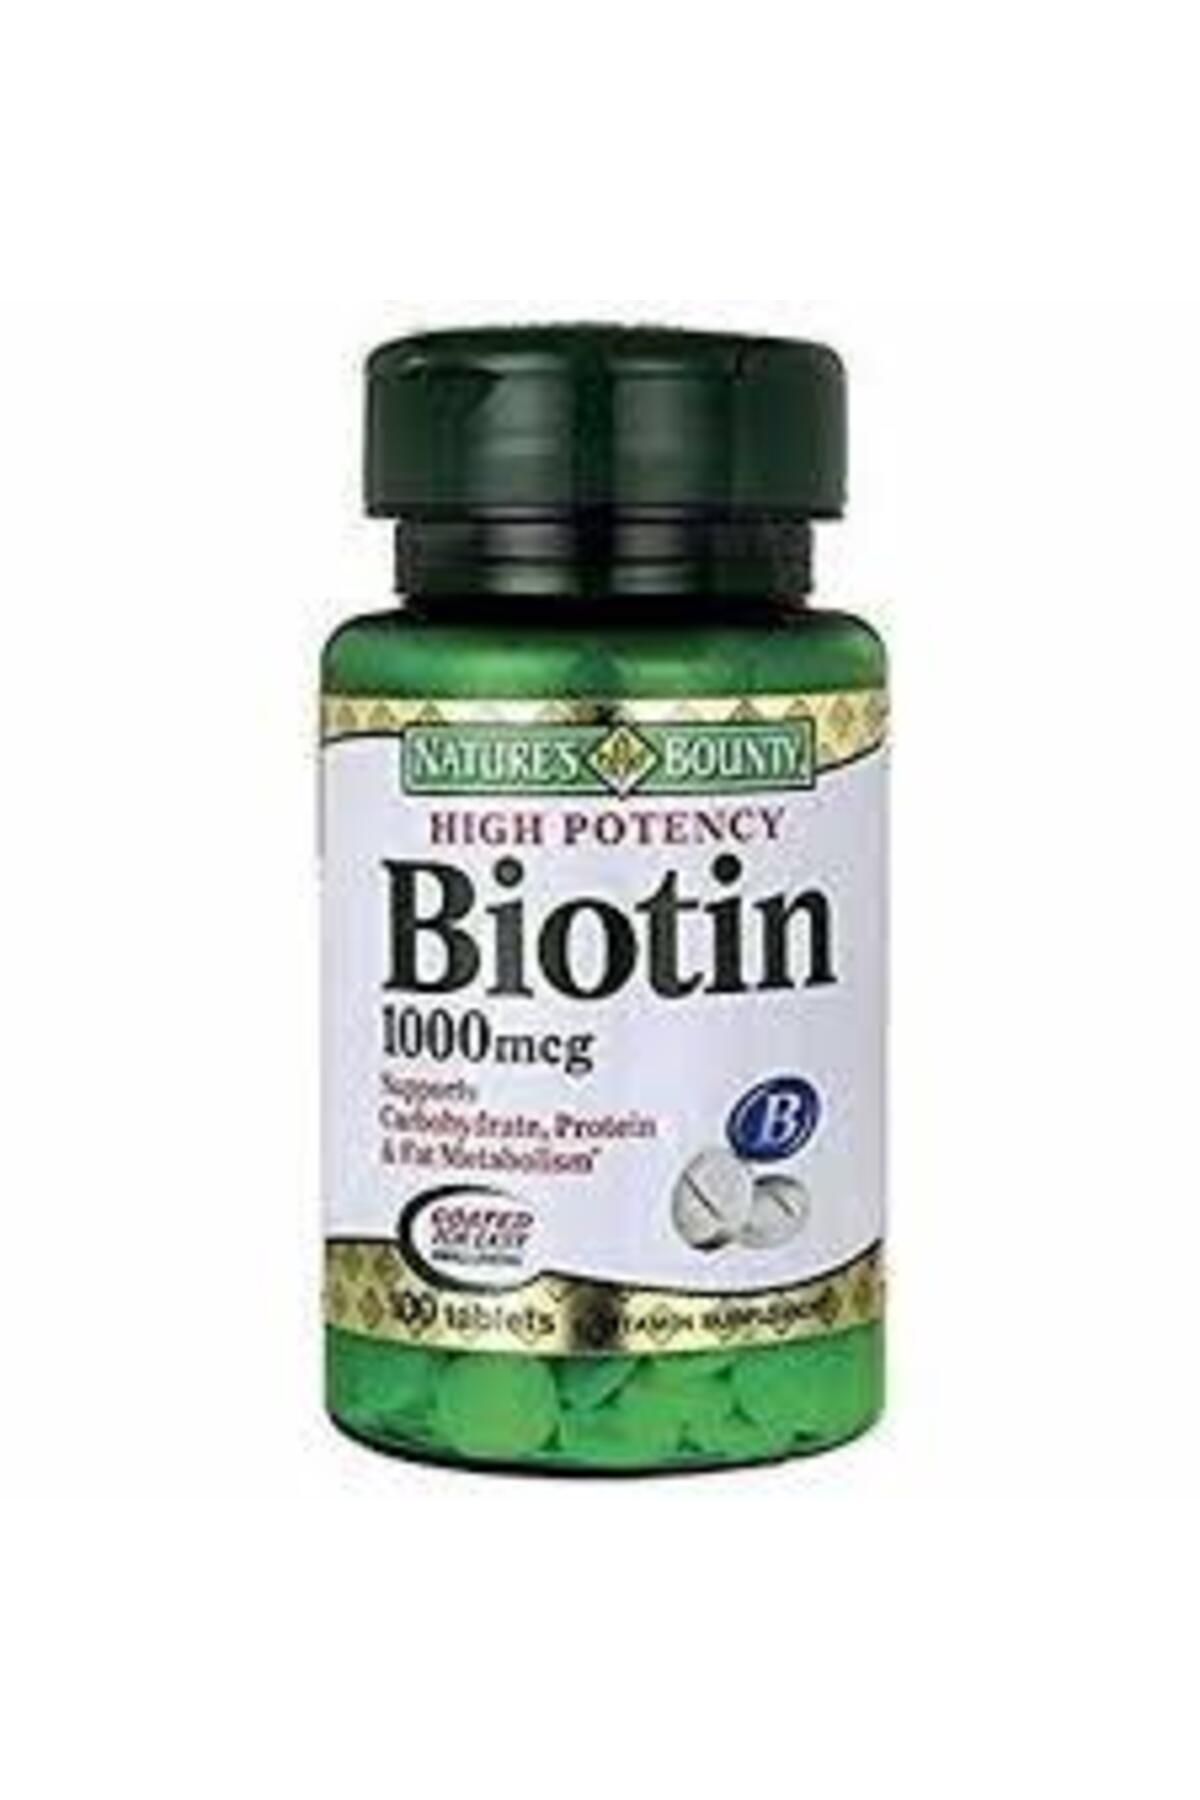 Natures Bounty Biotin 1000 Mcg 100 Tablet